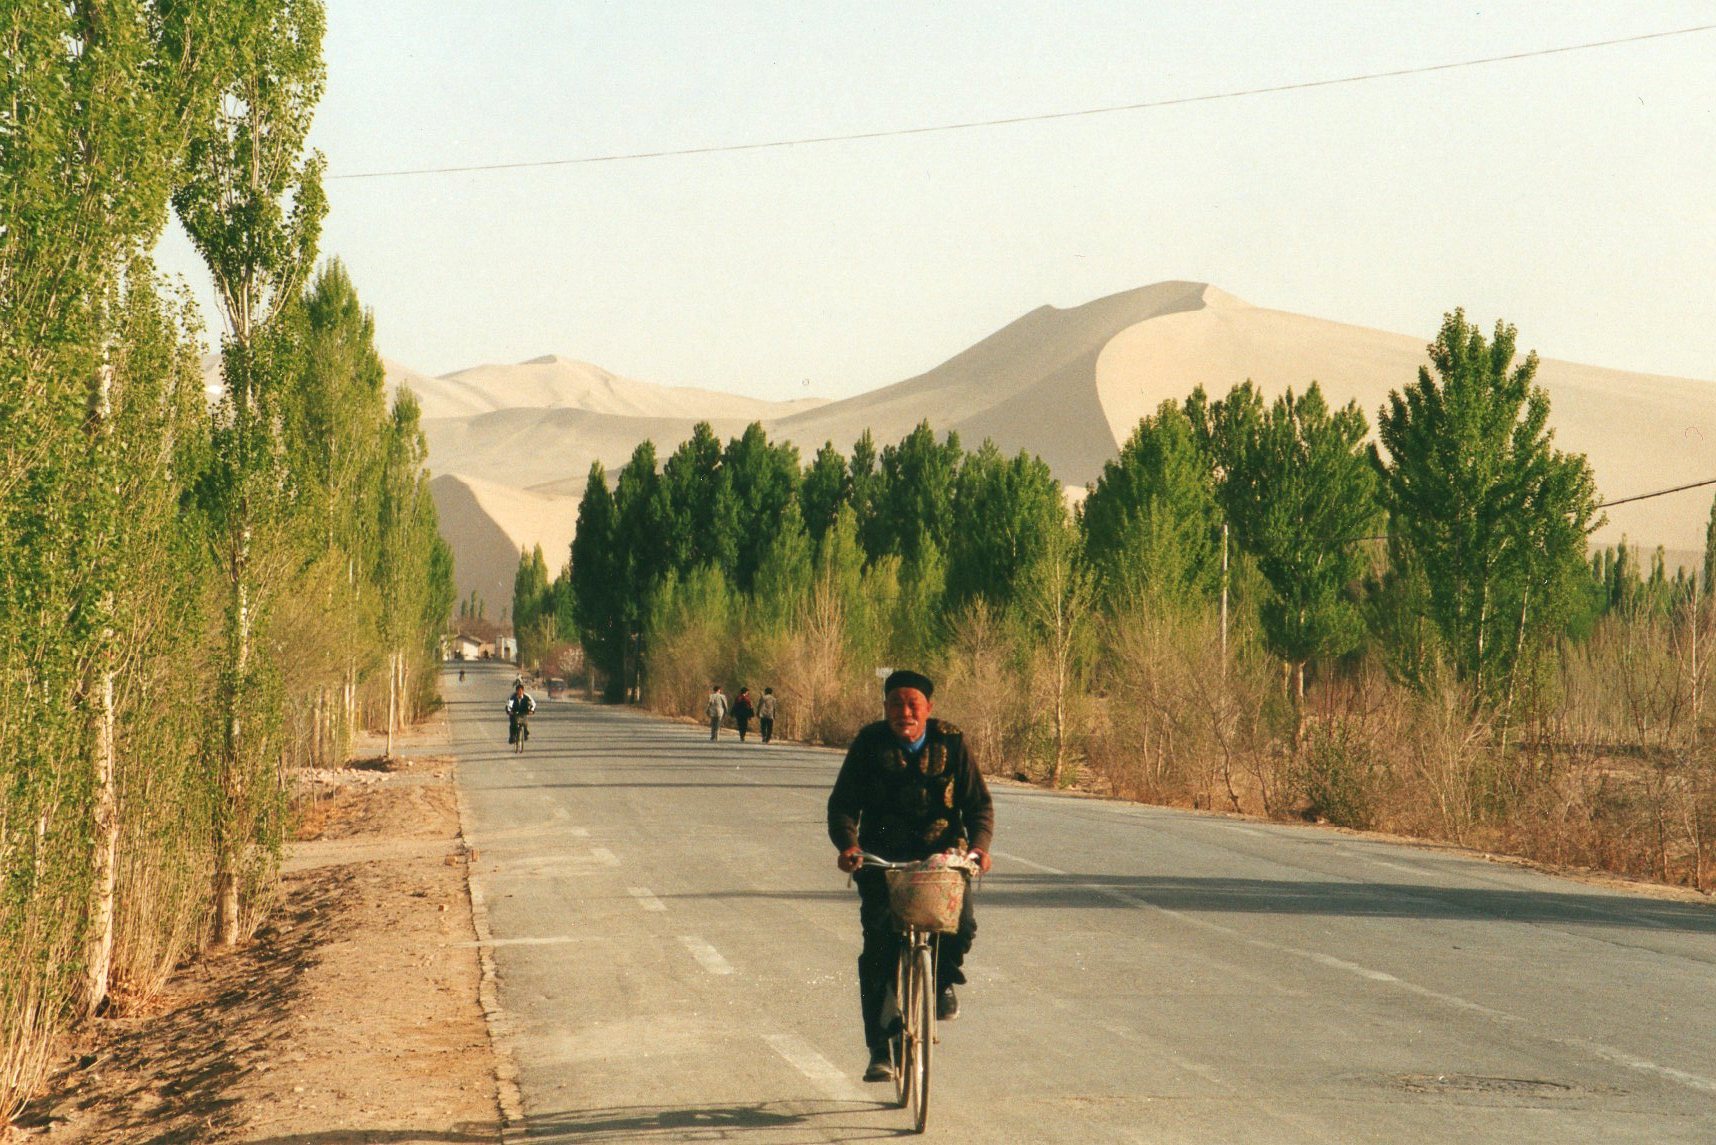 China North-west Gansu, Mingsha Dunes, Dunhuang, Empty road - 2001, Walkopedia